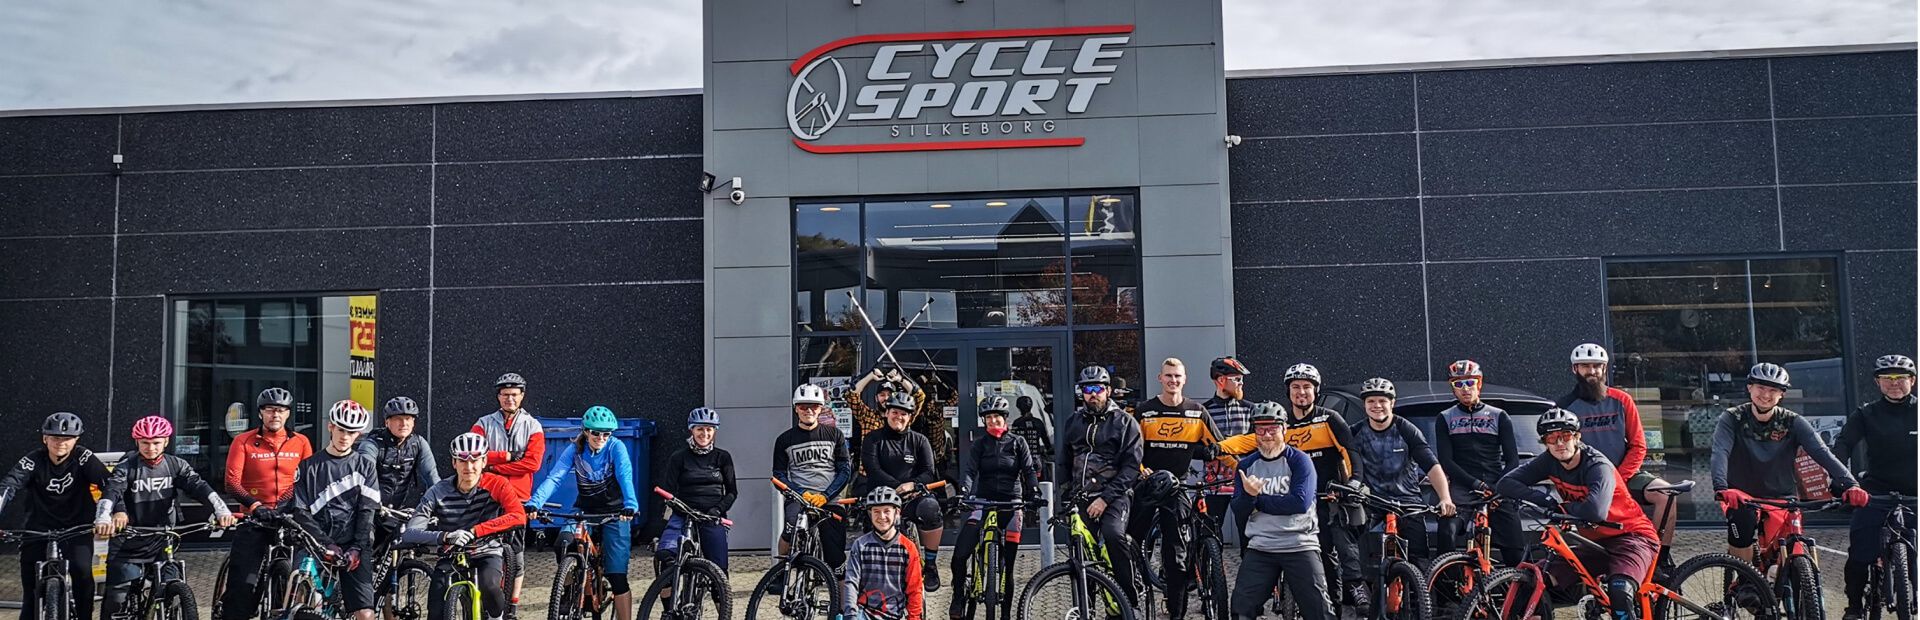 Se igennem drivhus anekdote Danmarks førende Mountainbike butik - Cyclesport Silkeborg